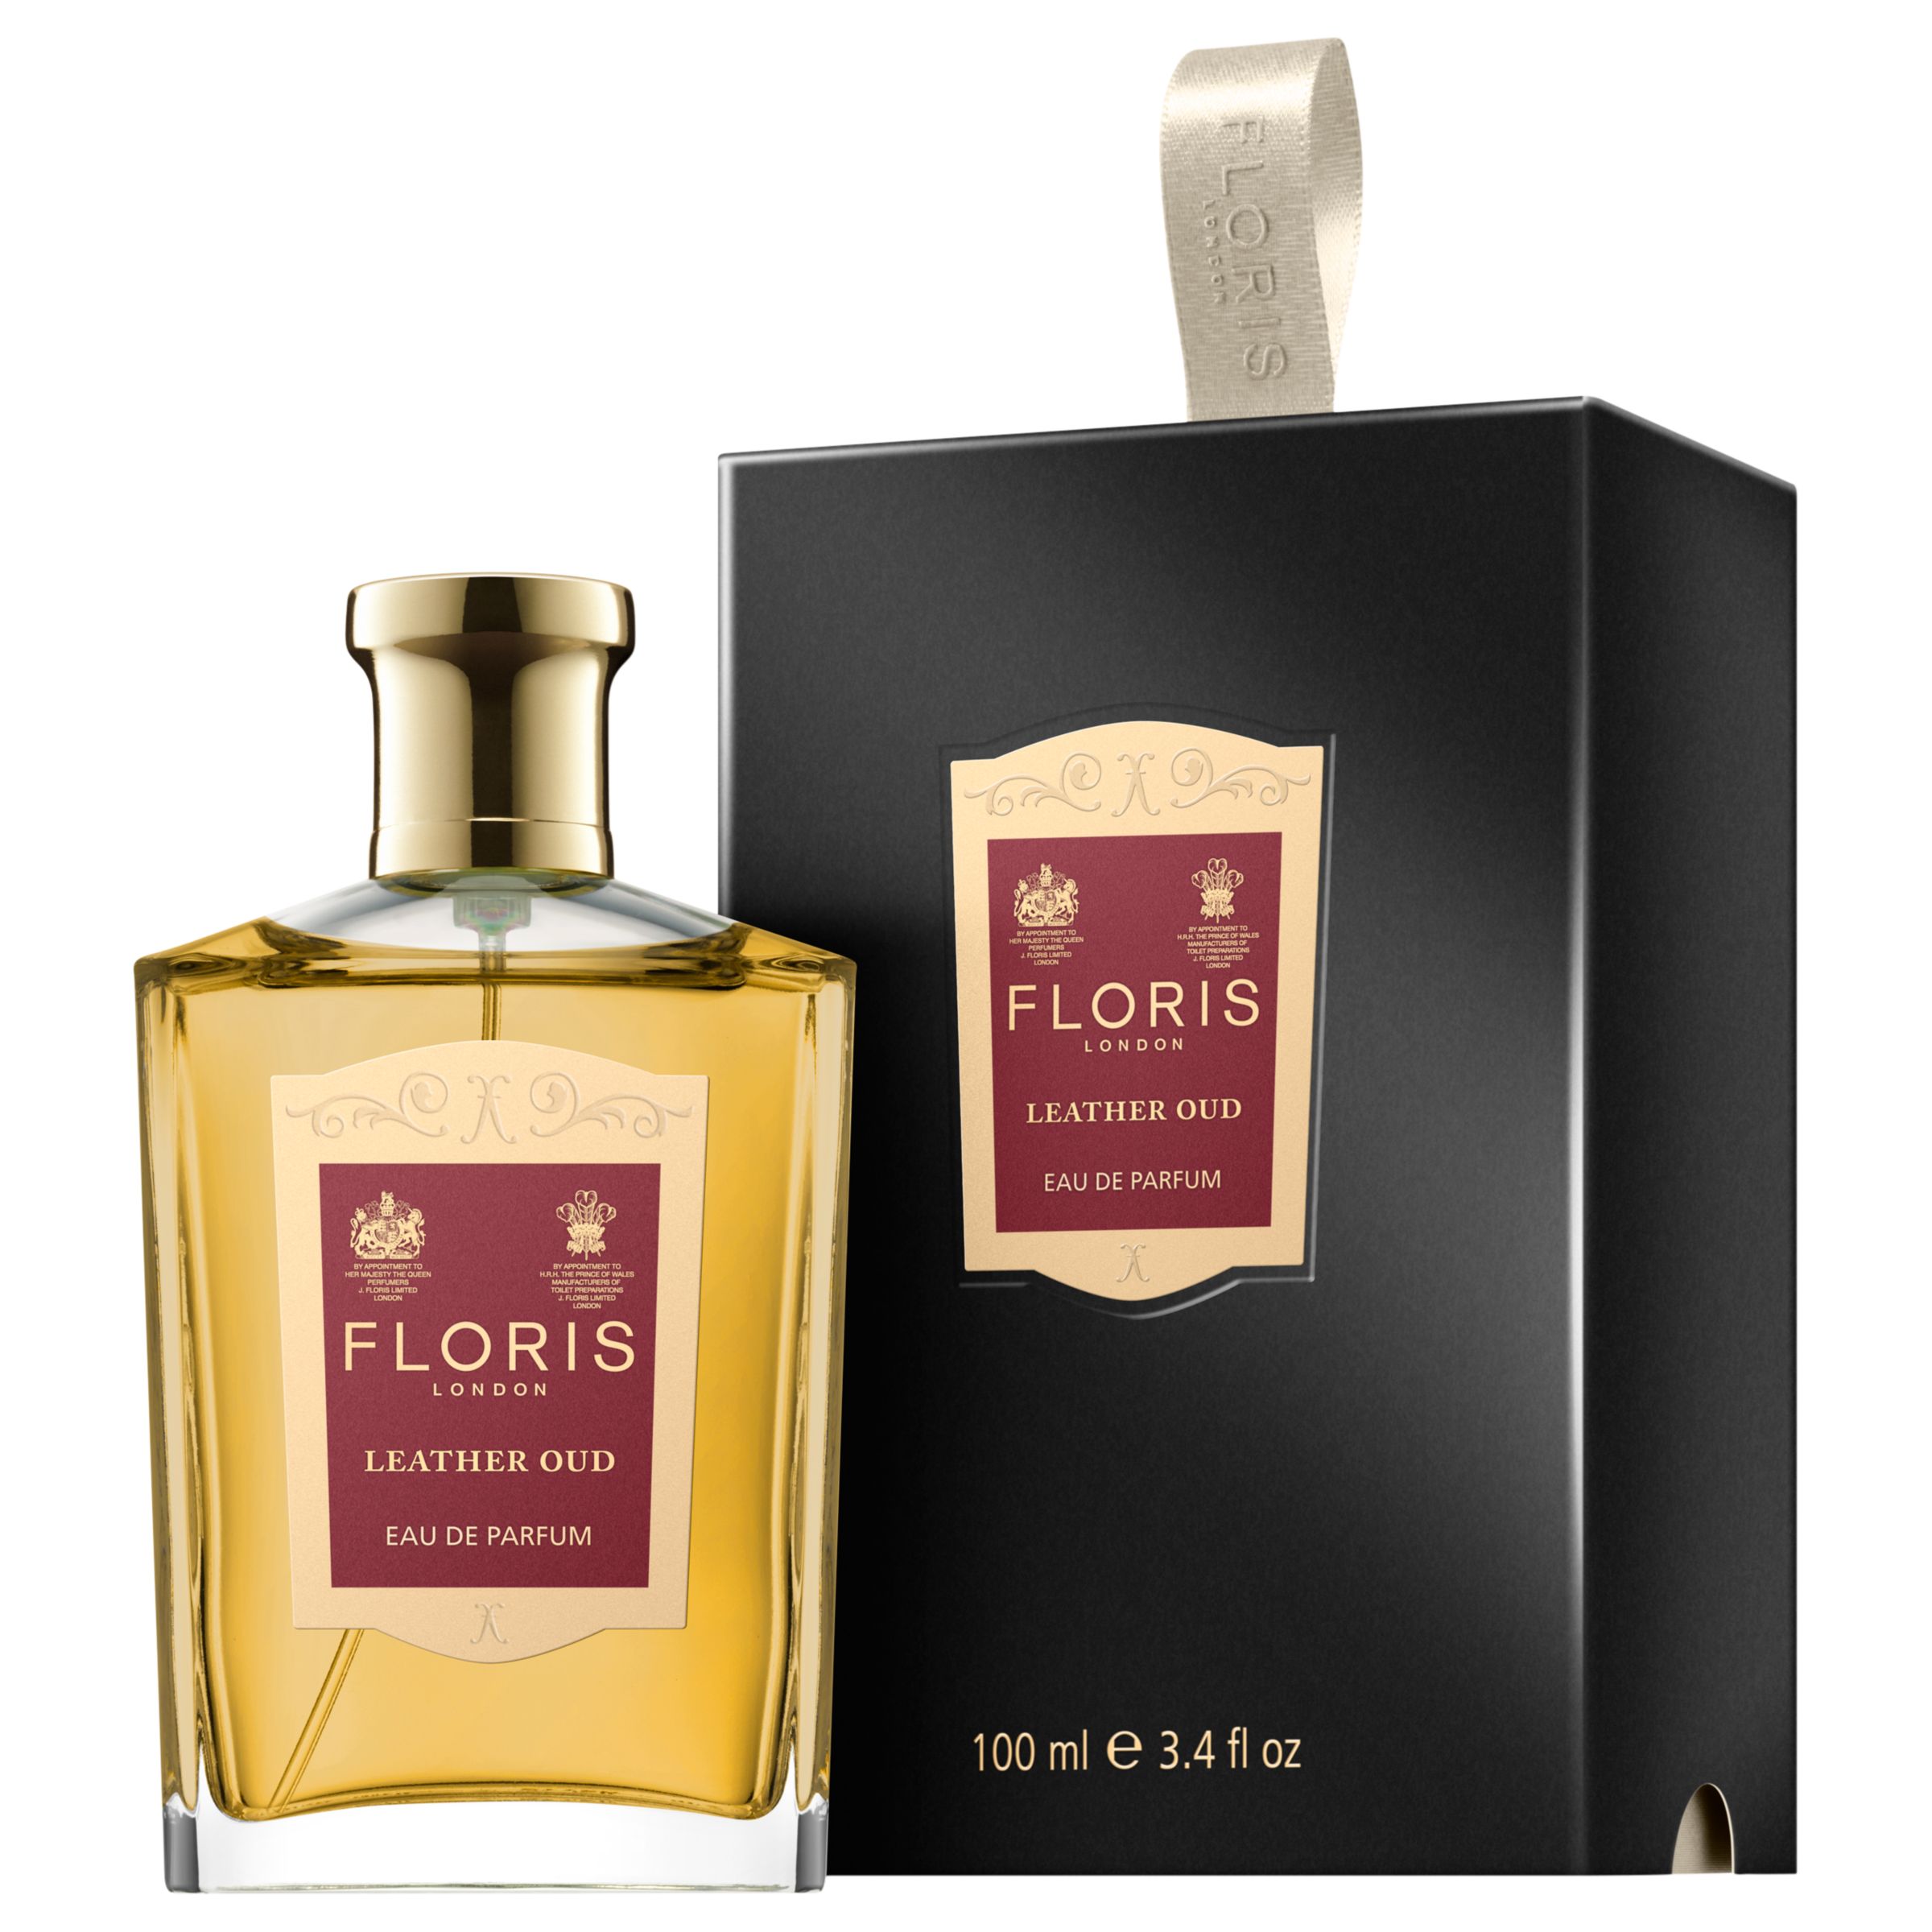 Nuit perfume 100 ml perfume spray Eau de parfum for men and women- leather,  oud long lasting scent perfume spray : : Beauty